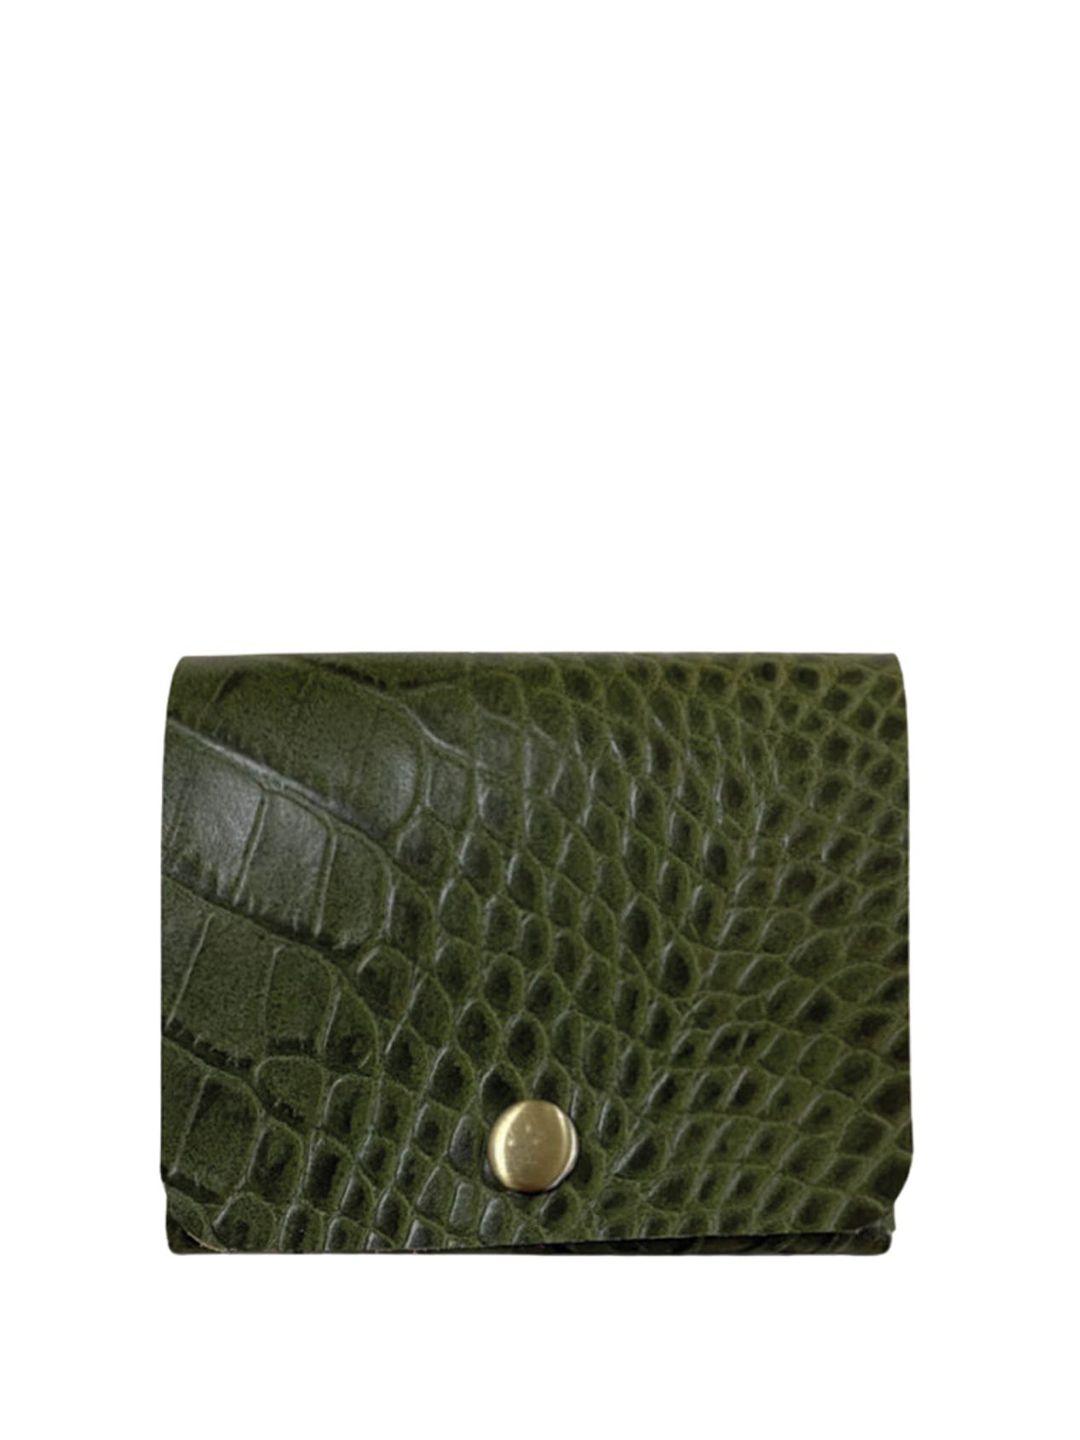 strutt unisex textured leather two fold wallet